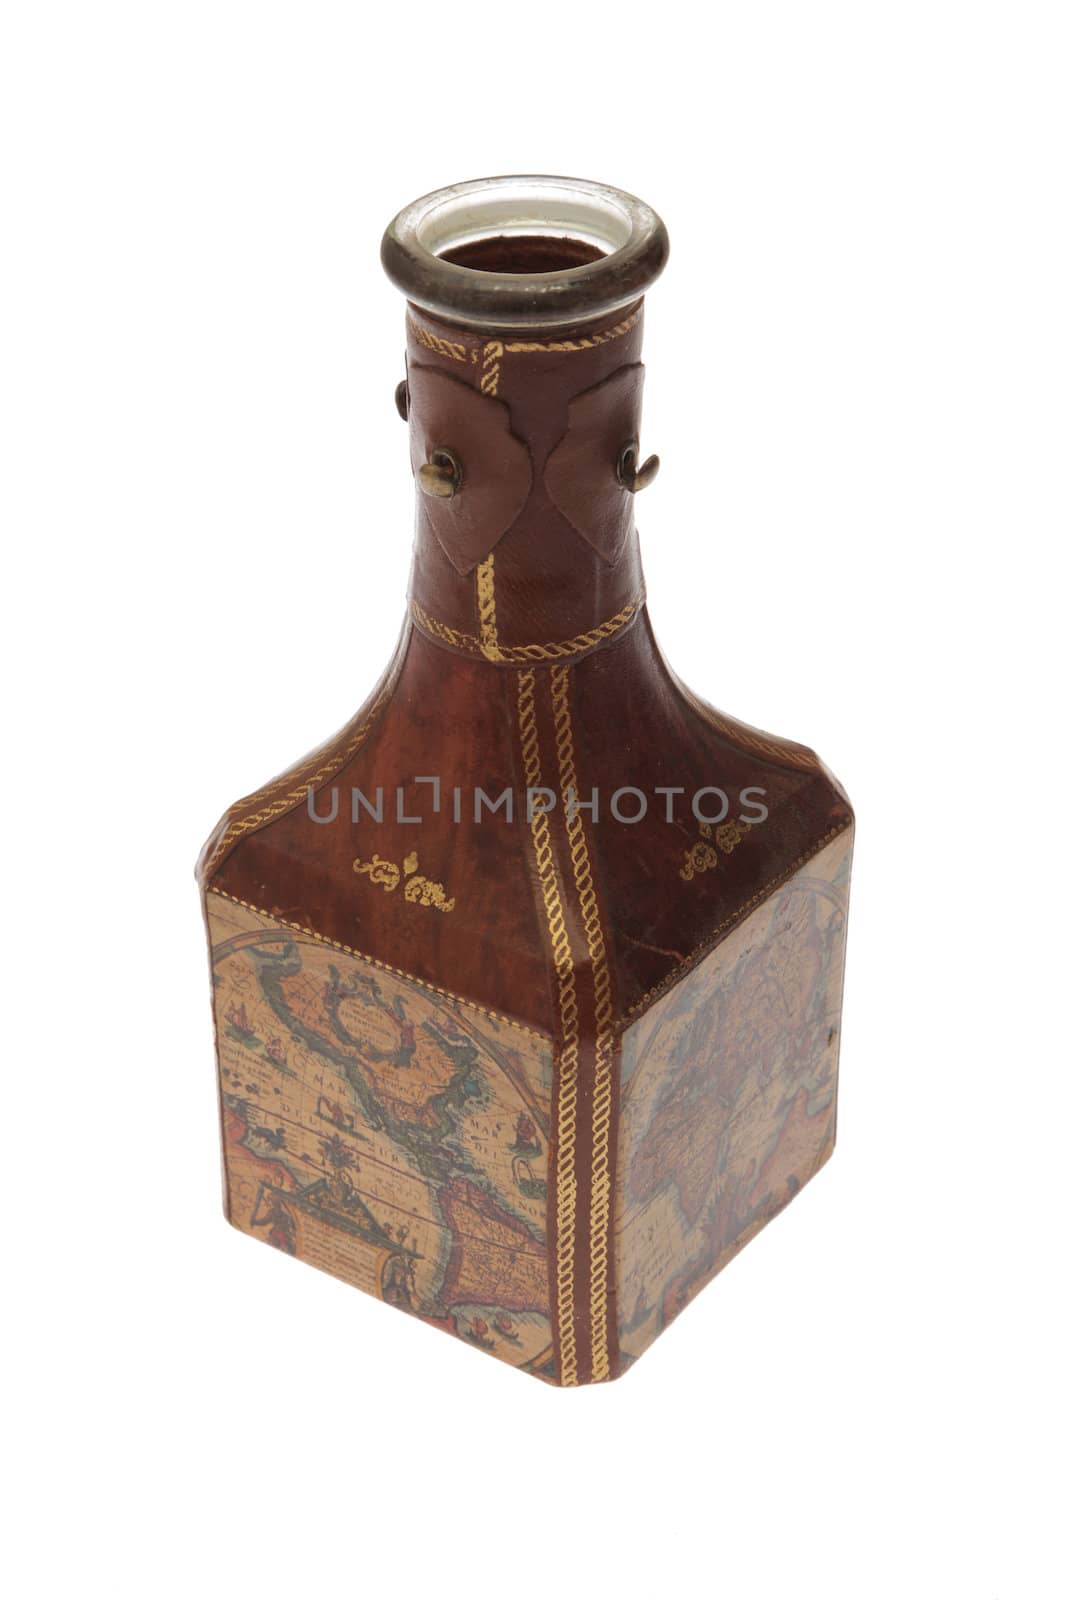 Explorer's liquor bottle  by haiderazim